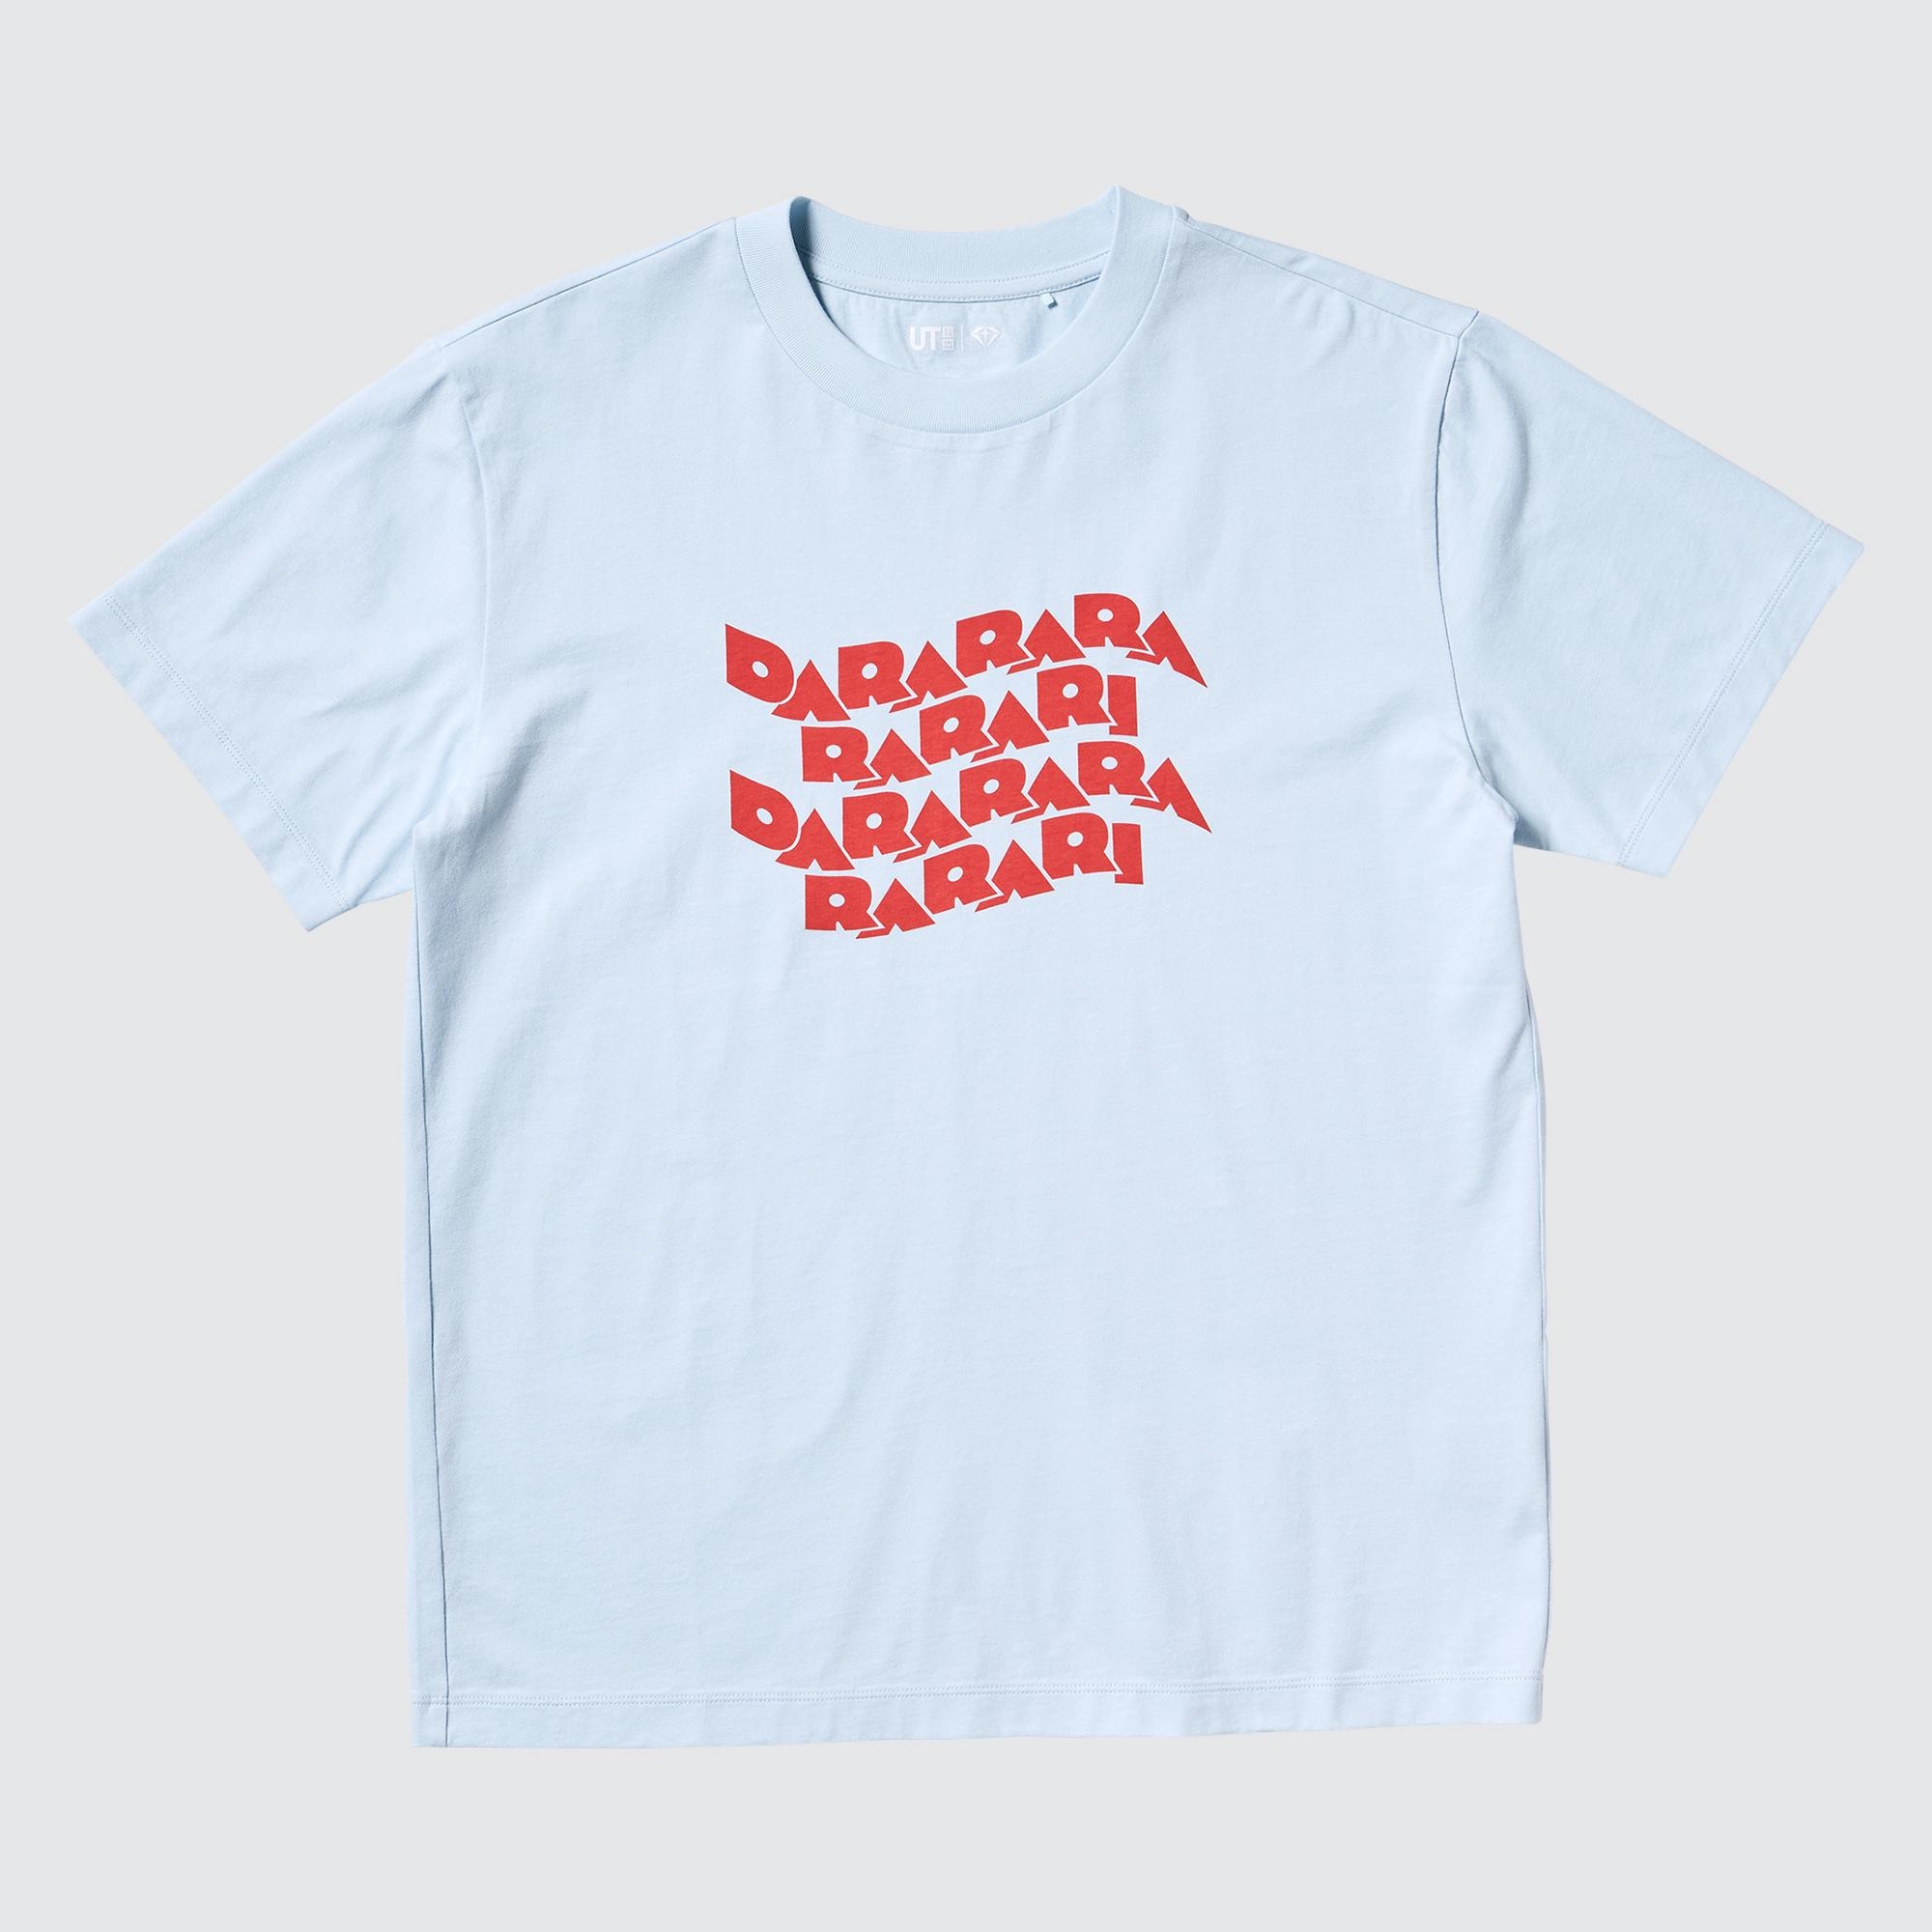 Find Your TREASURE UT (Short-Sleeve Graphic T-Shirt) (DARARI)